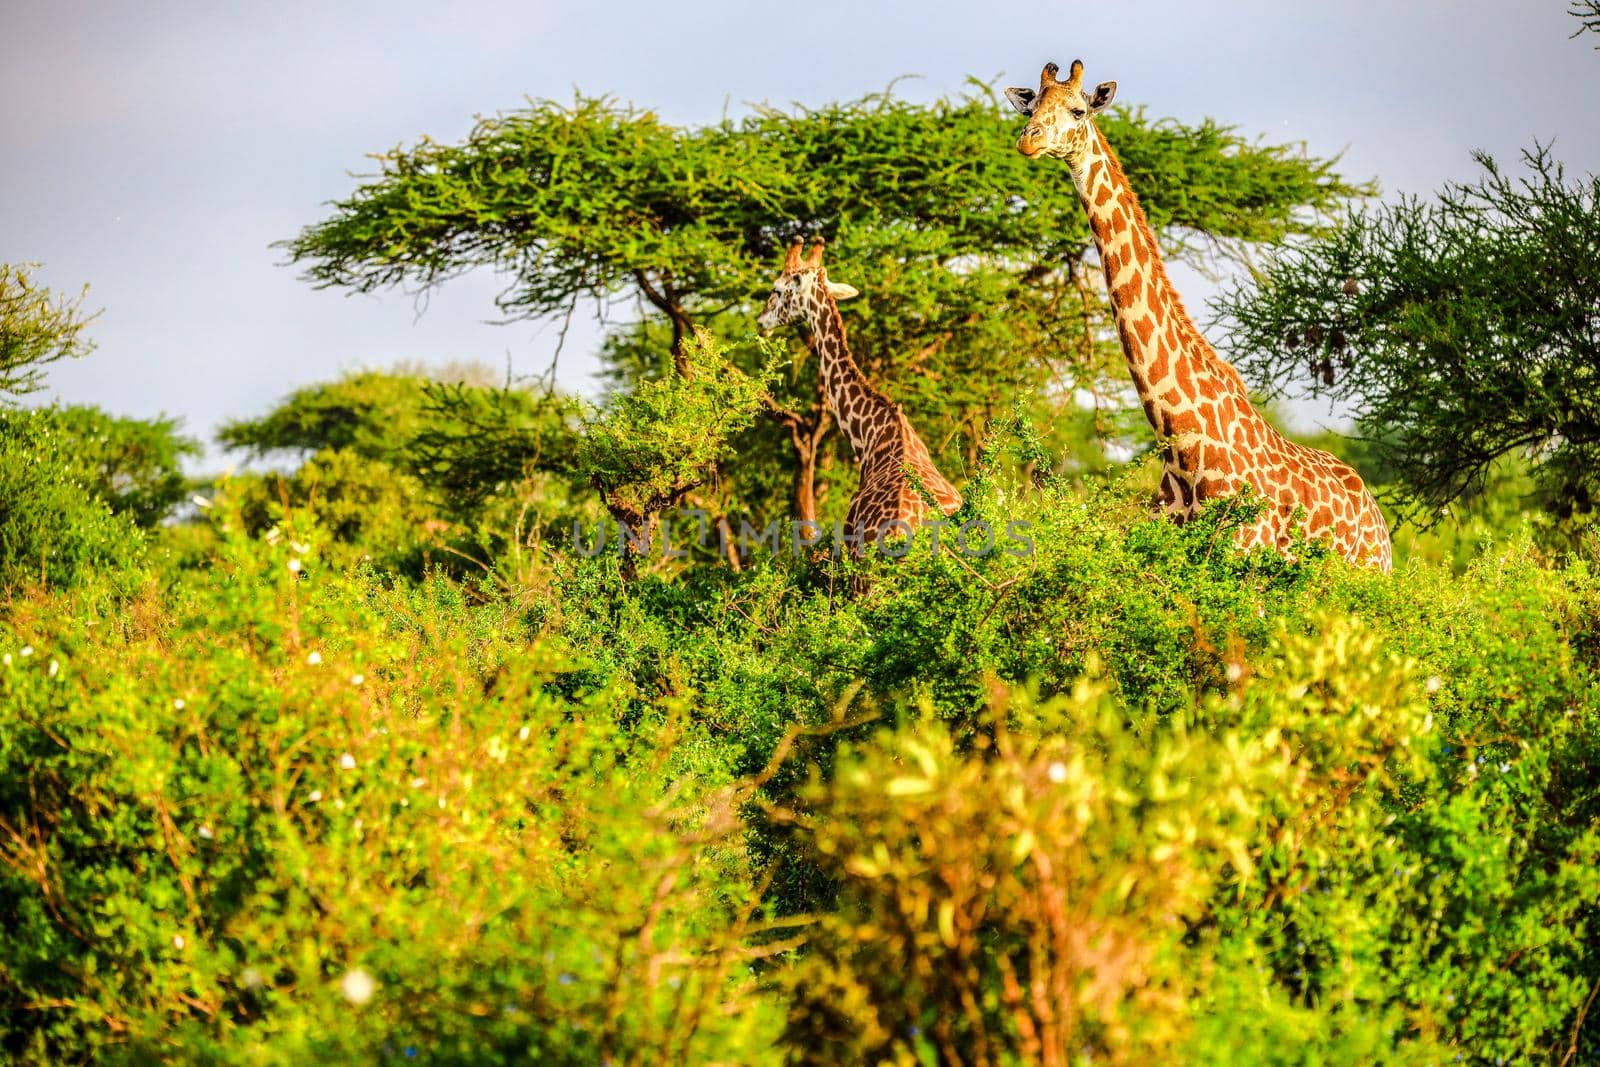 Masai Giraffe in Tsavo East Nationalpark, Kenya, Africa by Weltblick